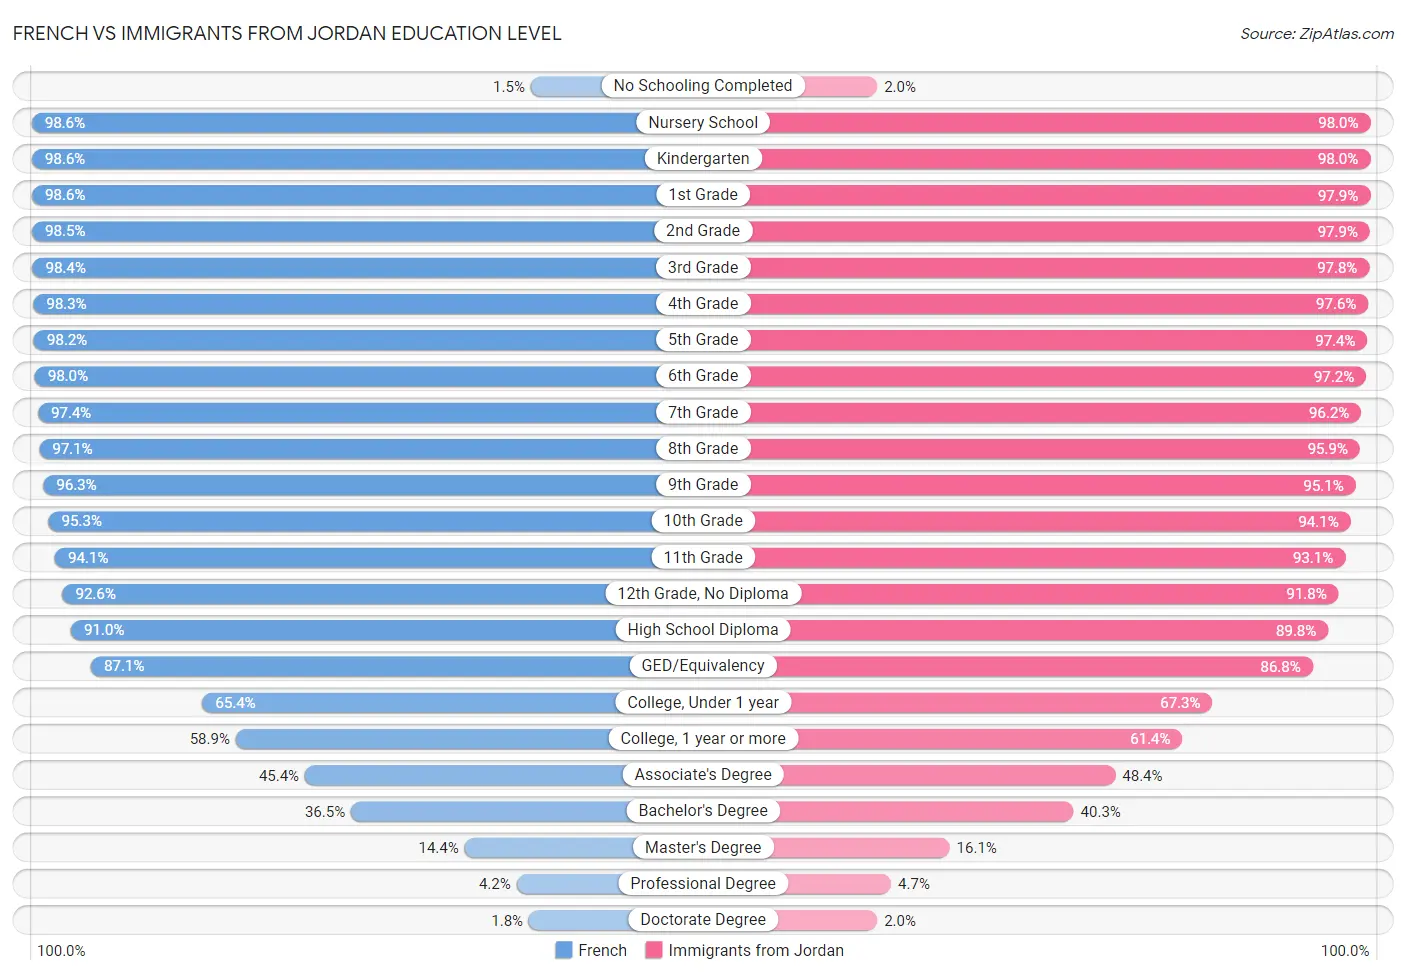 French vs Immigrants from Jordan Education Level